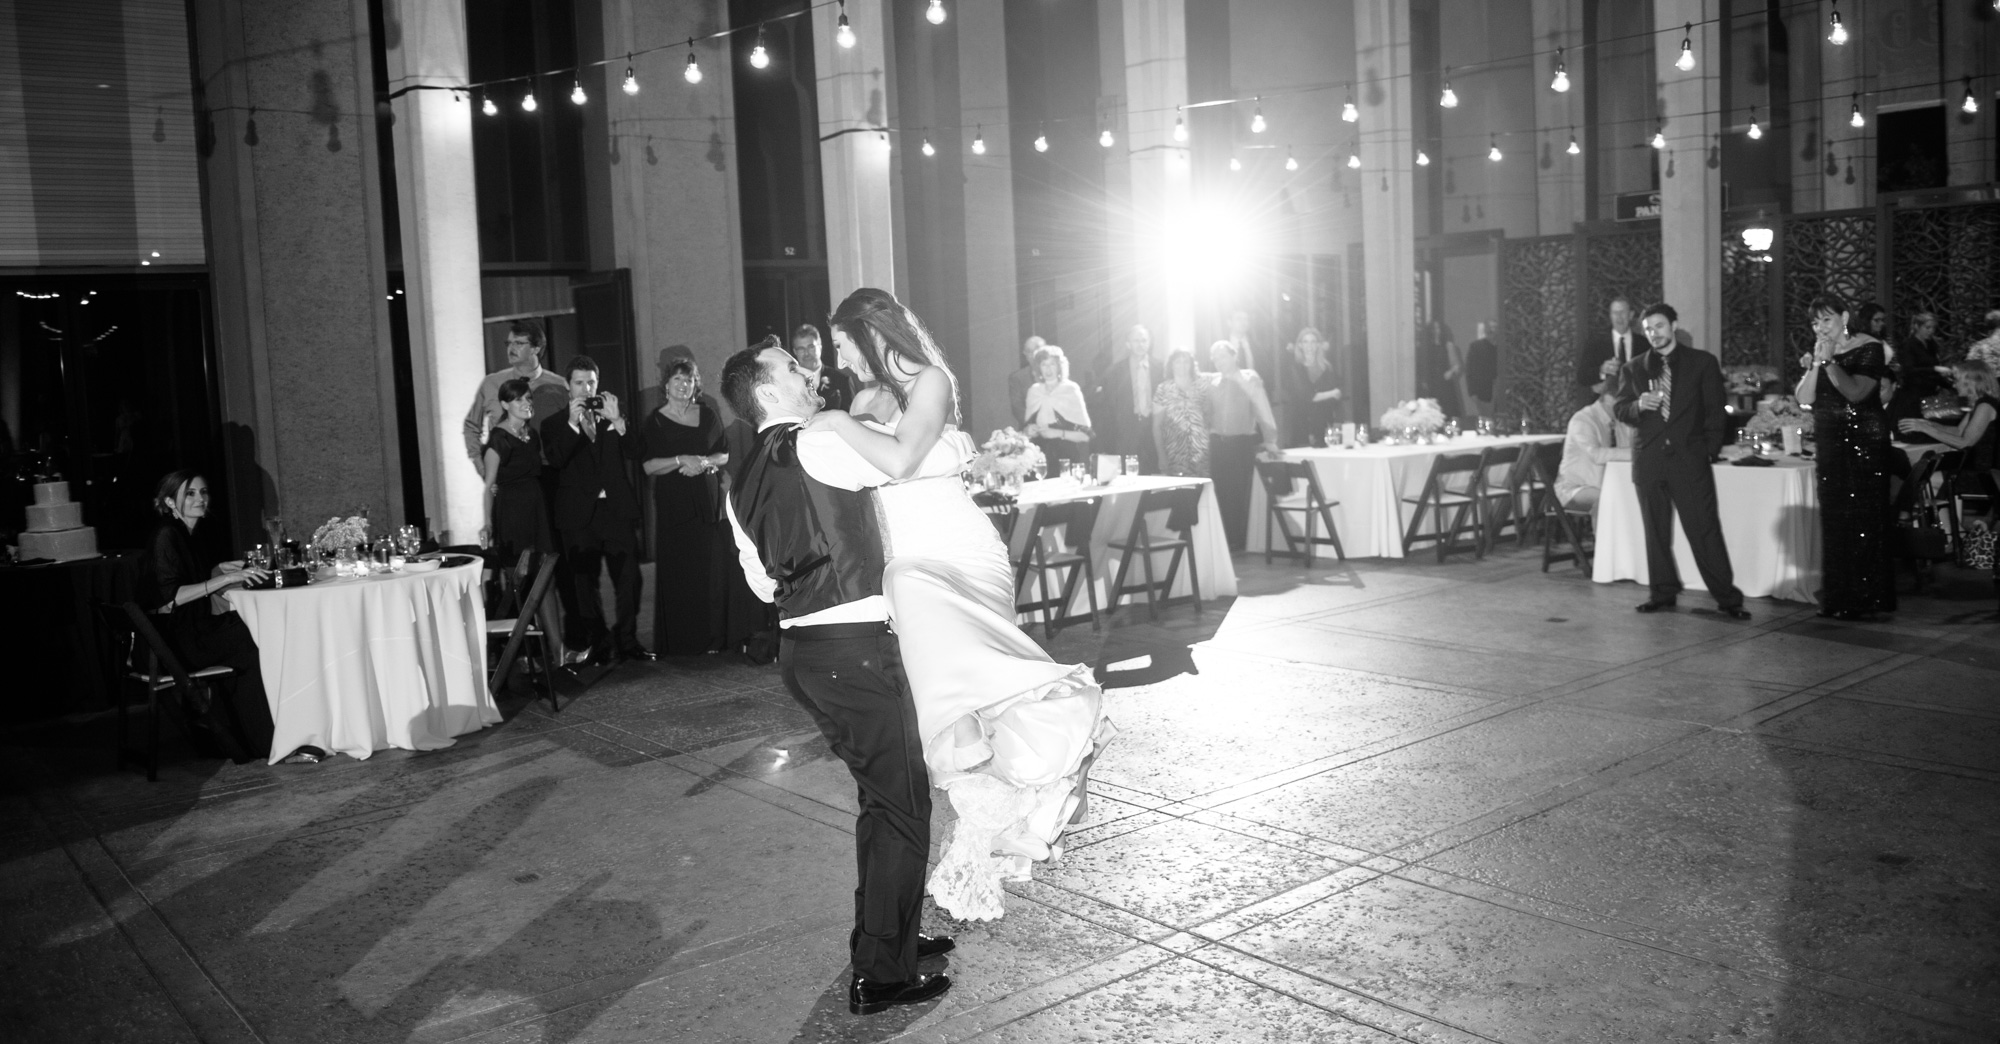 Angie & Pat’s Balboa Park Wedding featured slider image